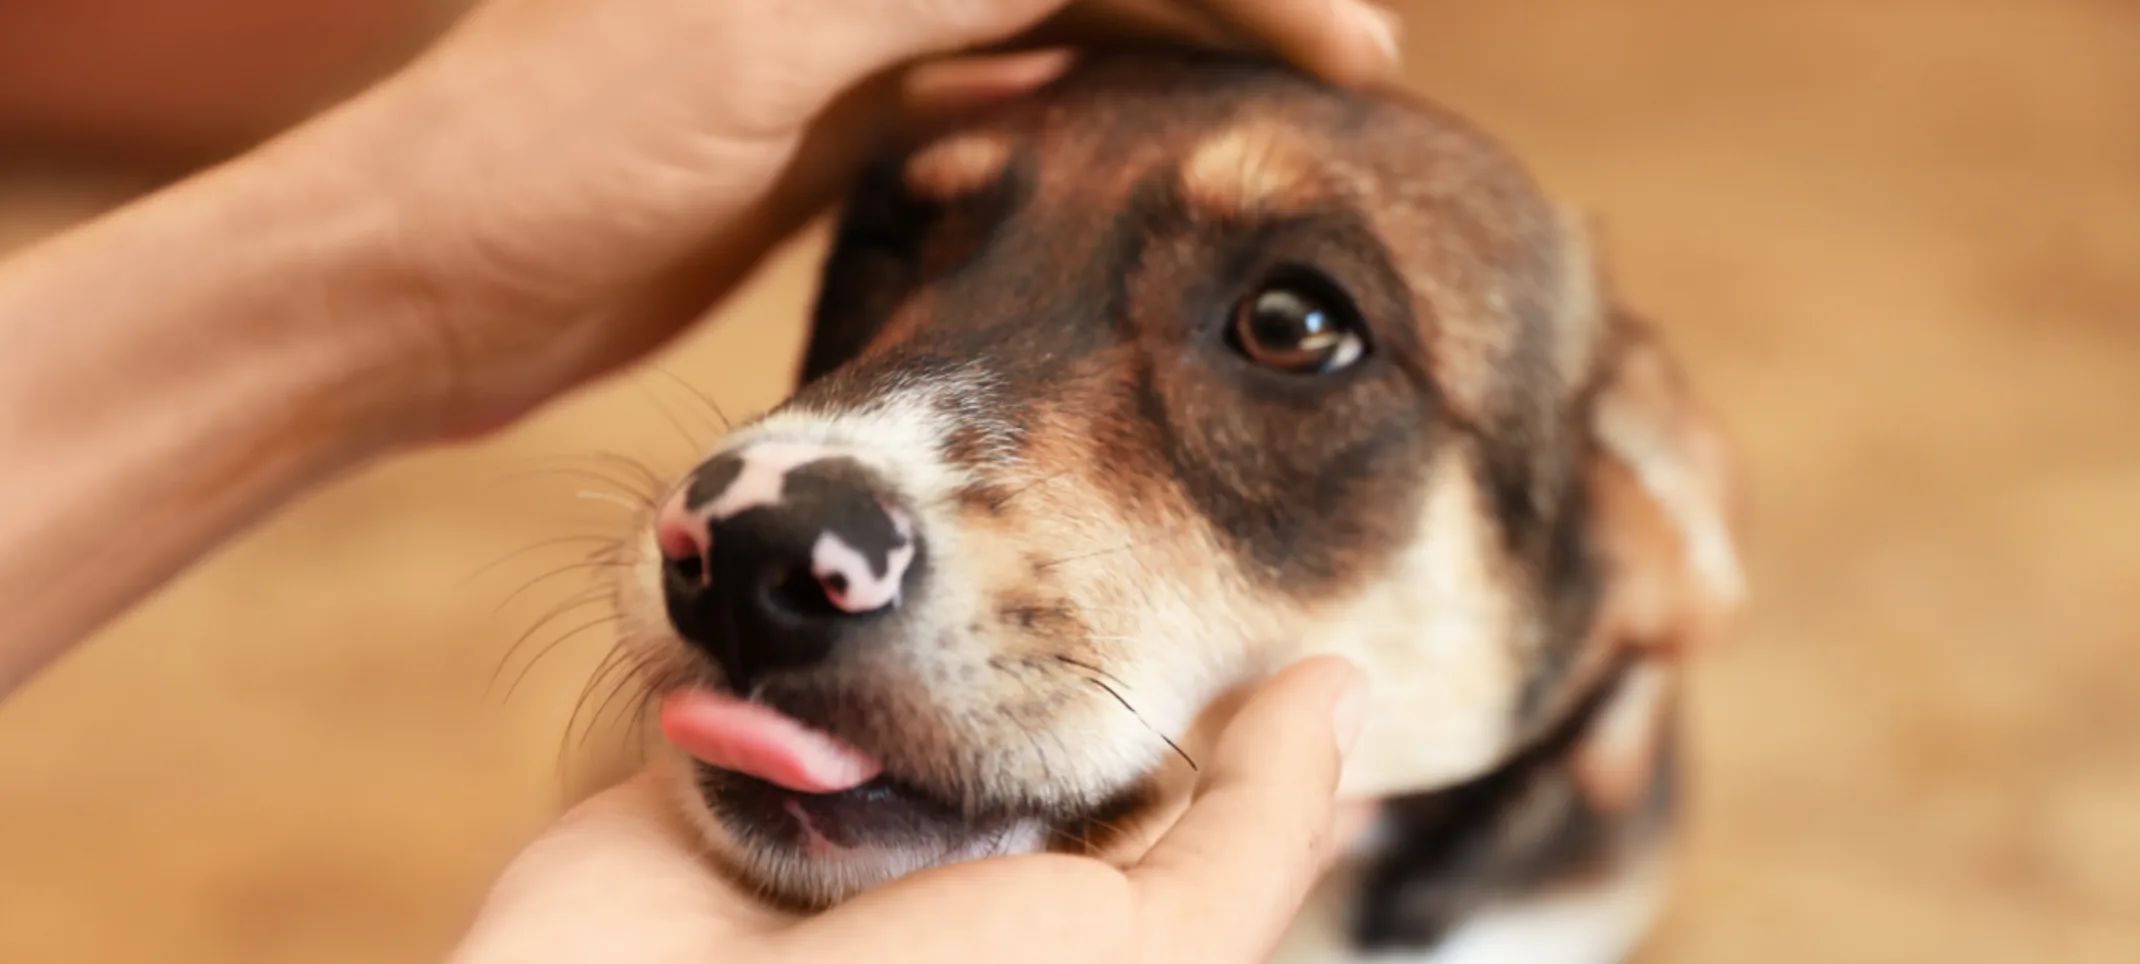 Veterinarian Examining a Dog's Face